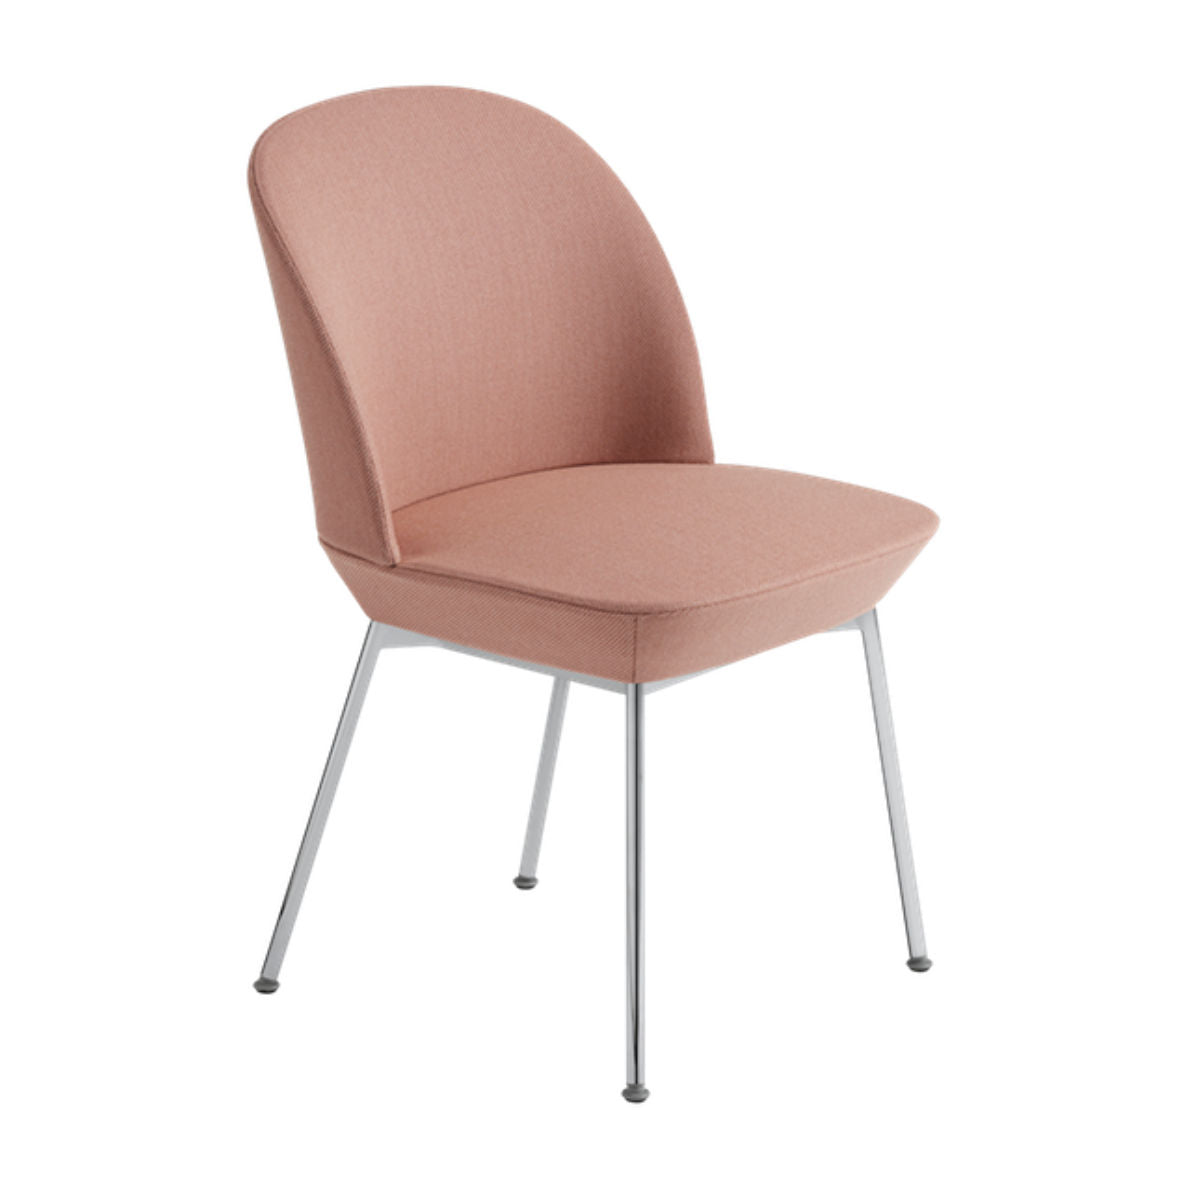 Muuto Oslo side chair, chrome